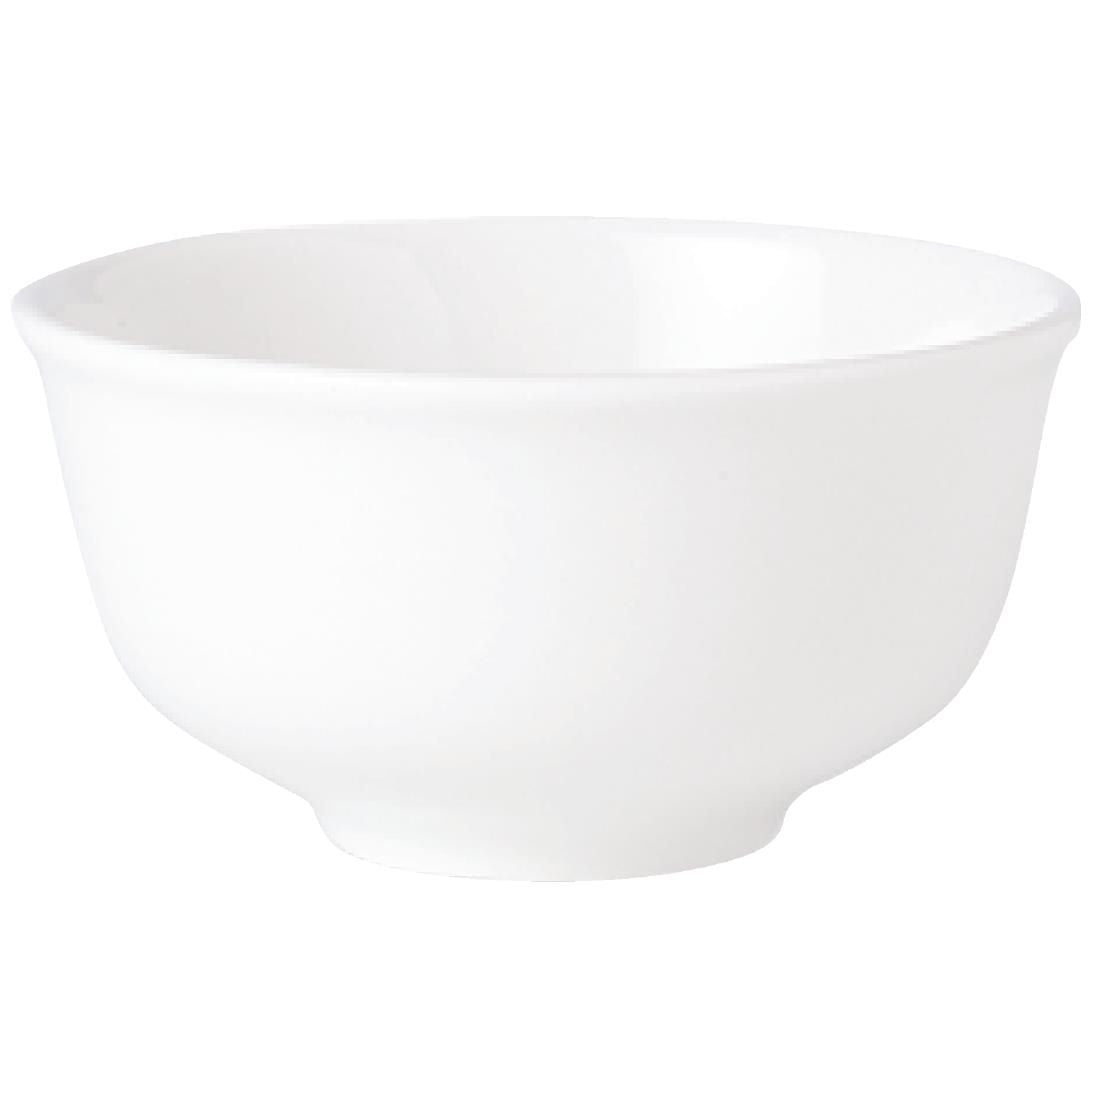 V0192 Steelite Simplicity White Sugar Bowls 227ml (Pack of 12)